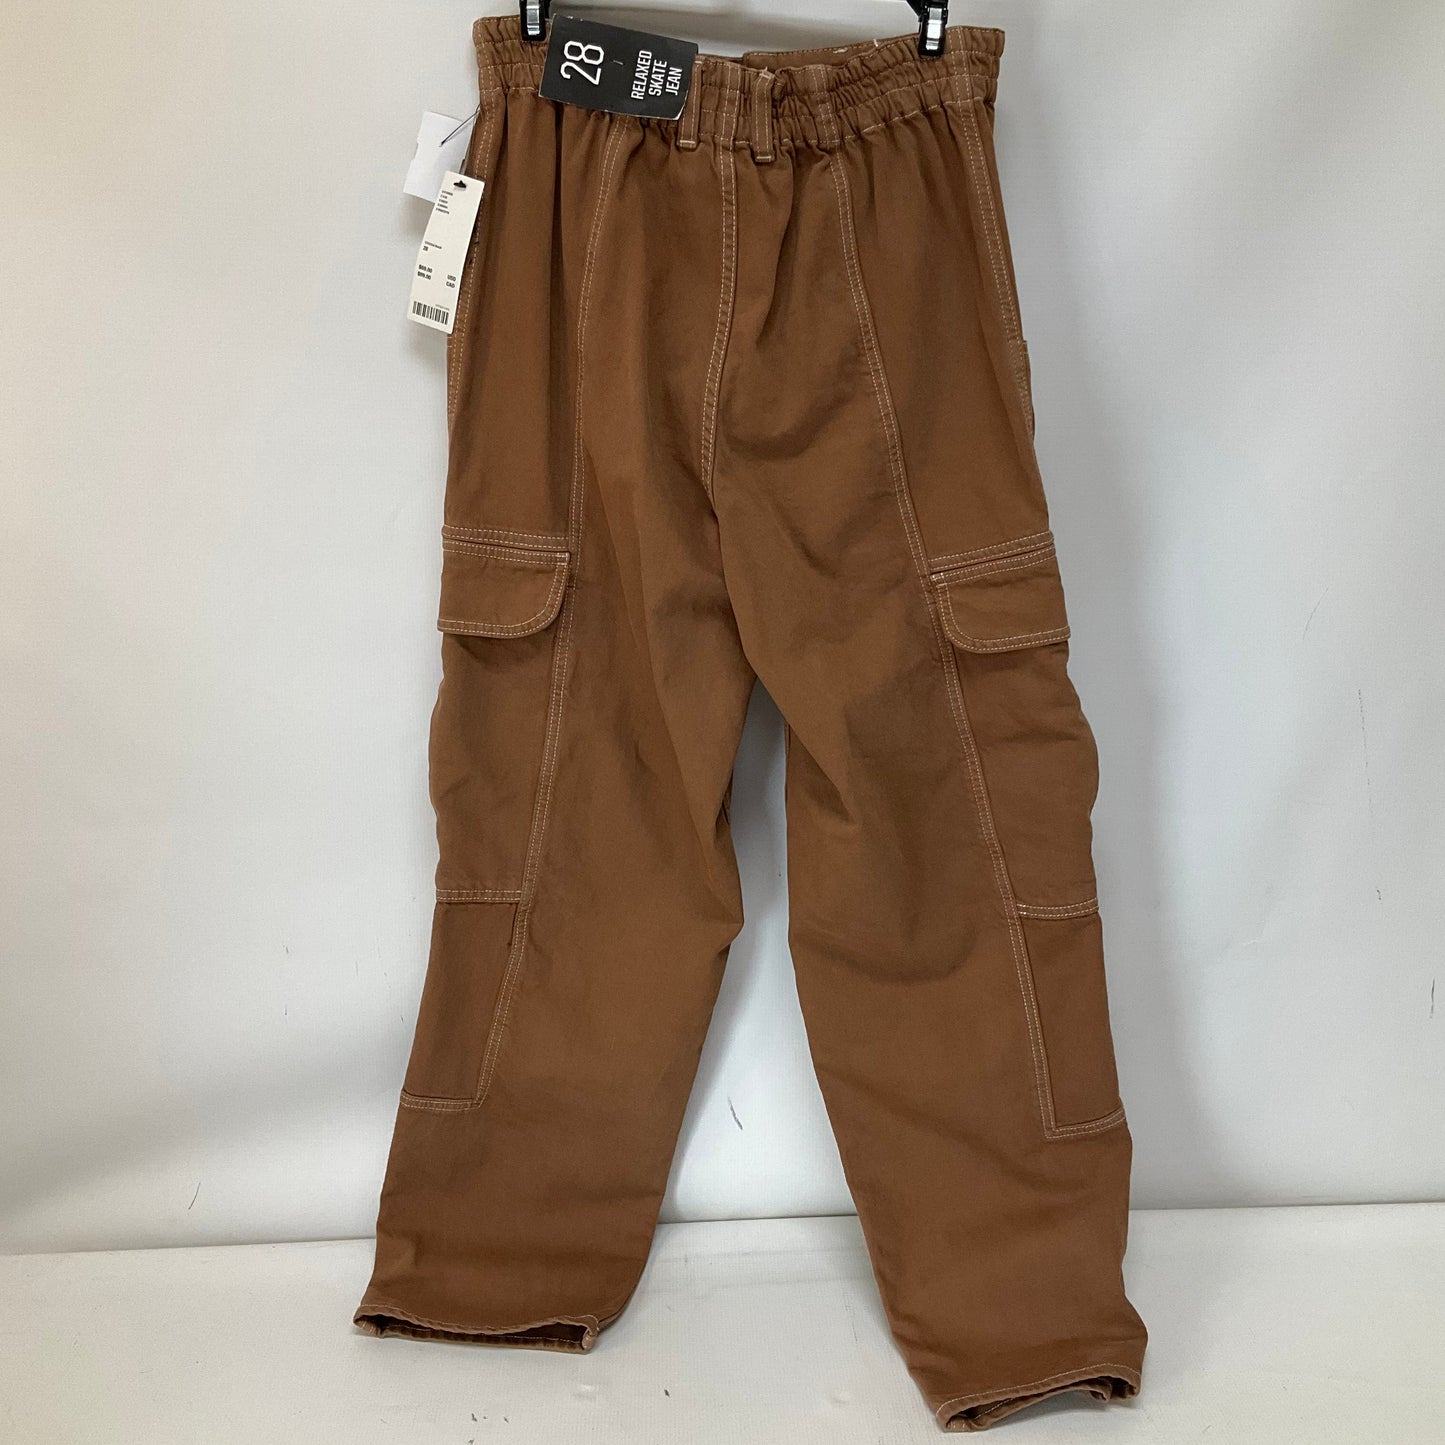 Brown Pants Cargo & Utility Bdg, Size 6